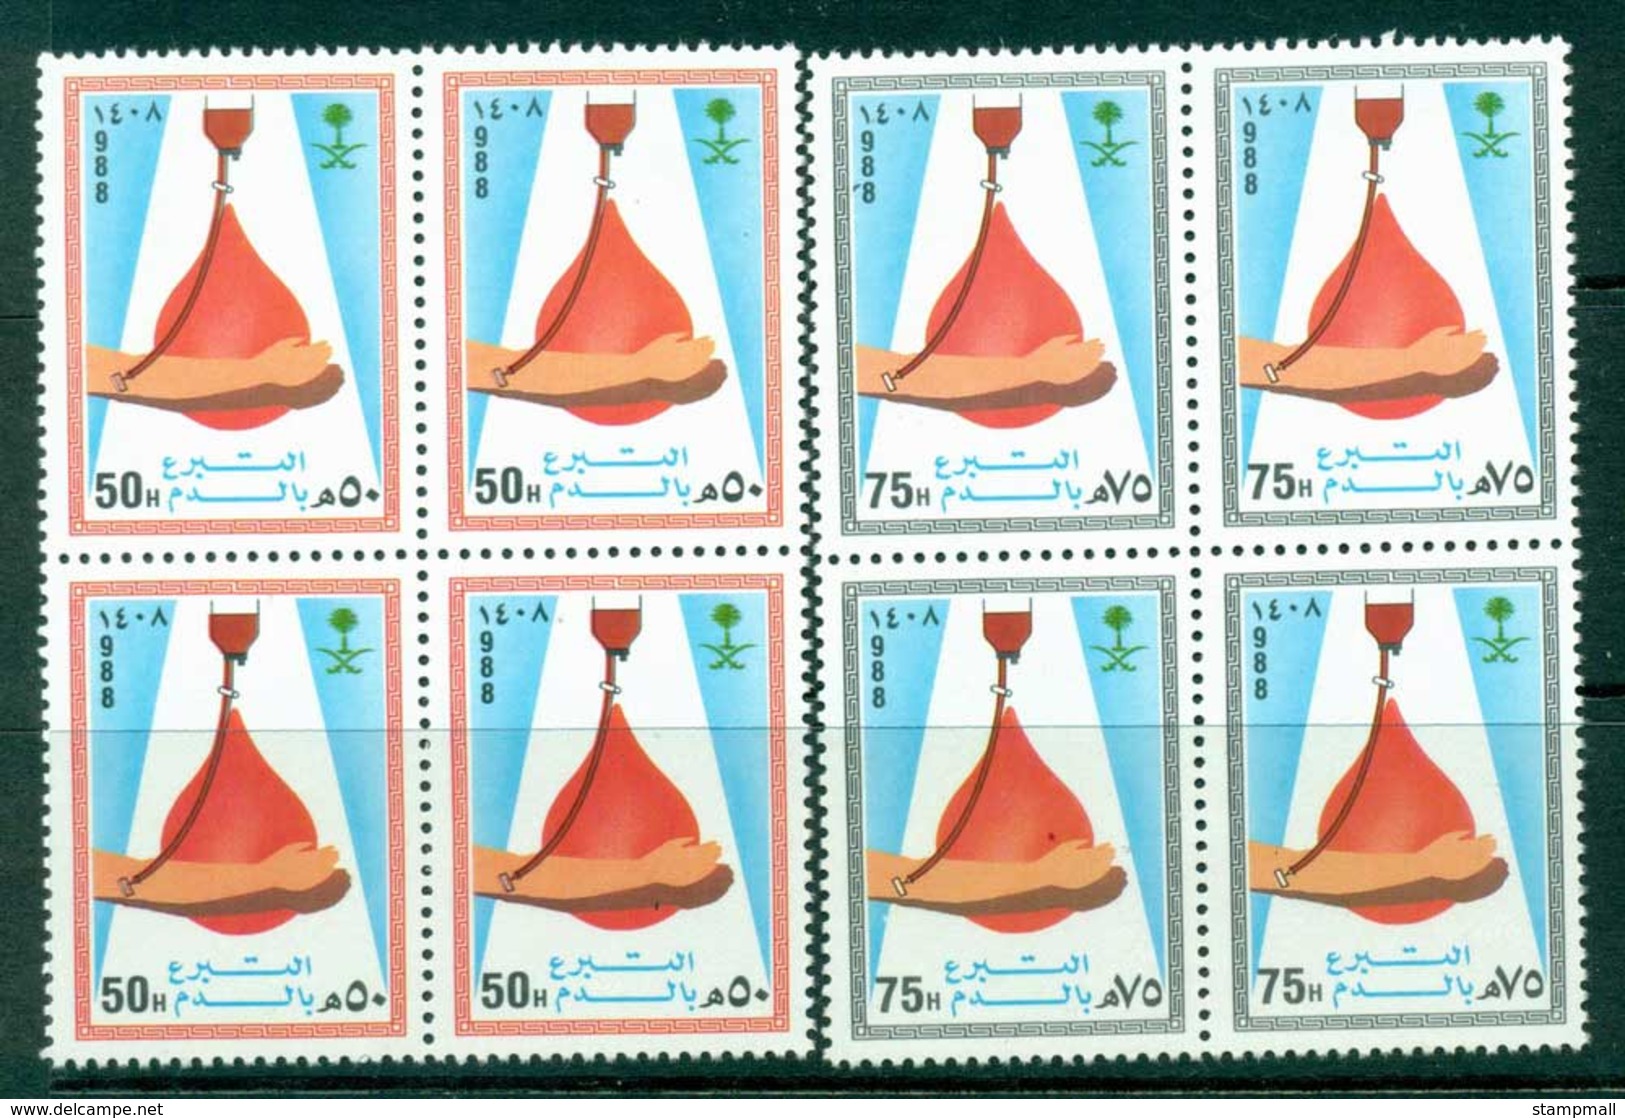 Saudi Arabia 1988 Blood Donation Block 4 MUH Lot26755 - Saudi Arabia